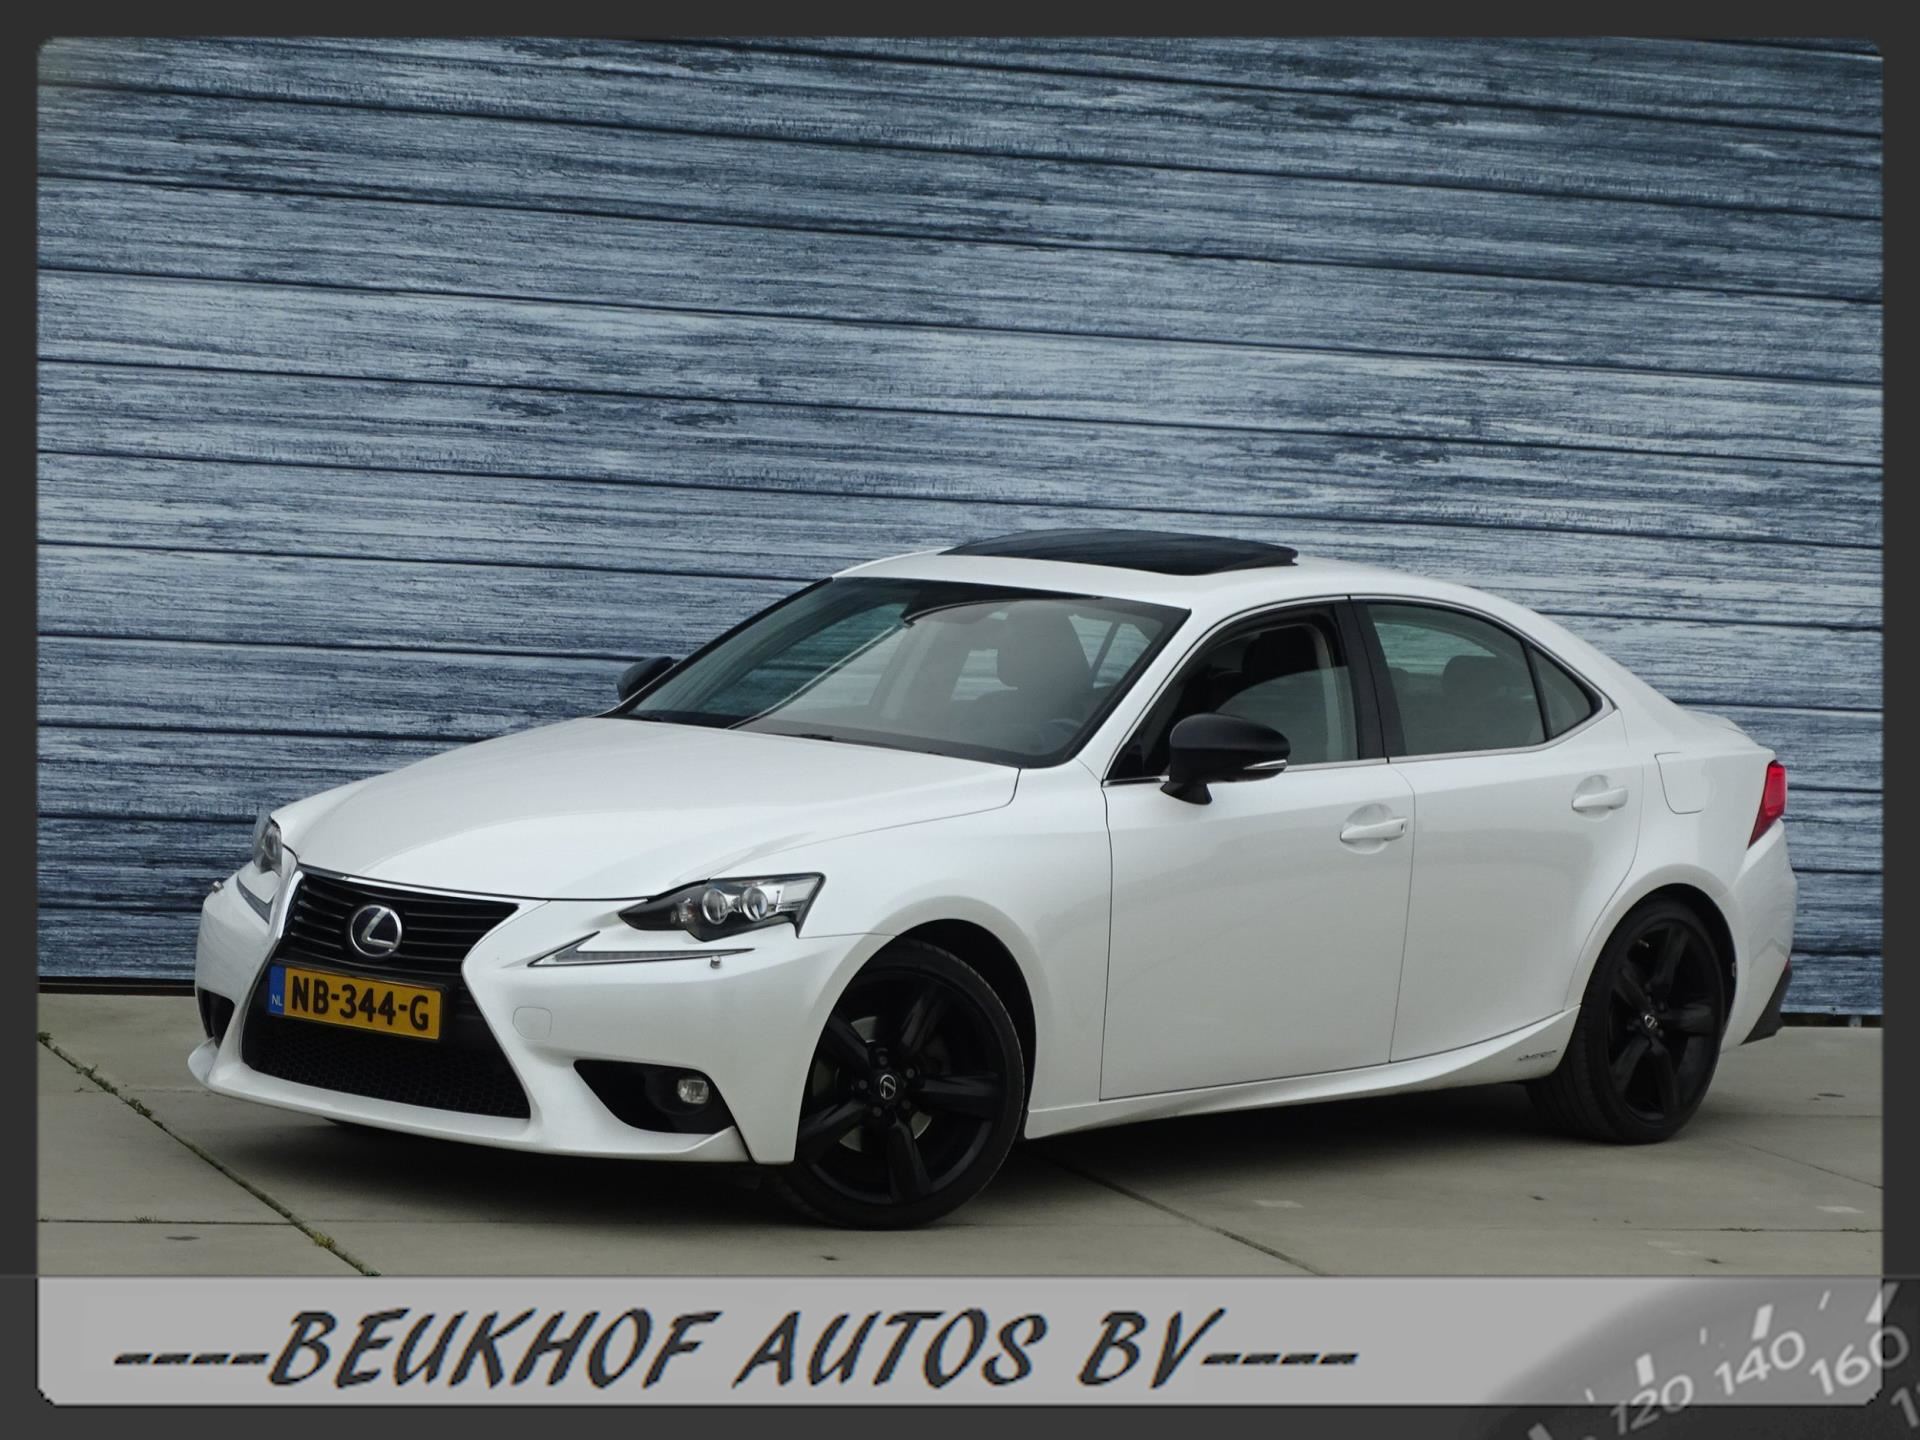 Lexus IS occasion - Beukhof Auto's B.V.